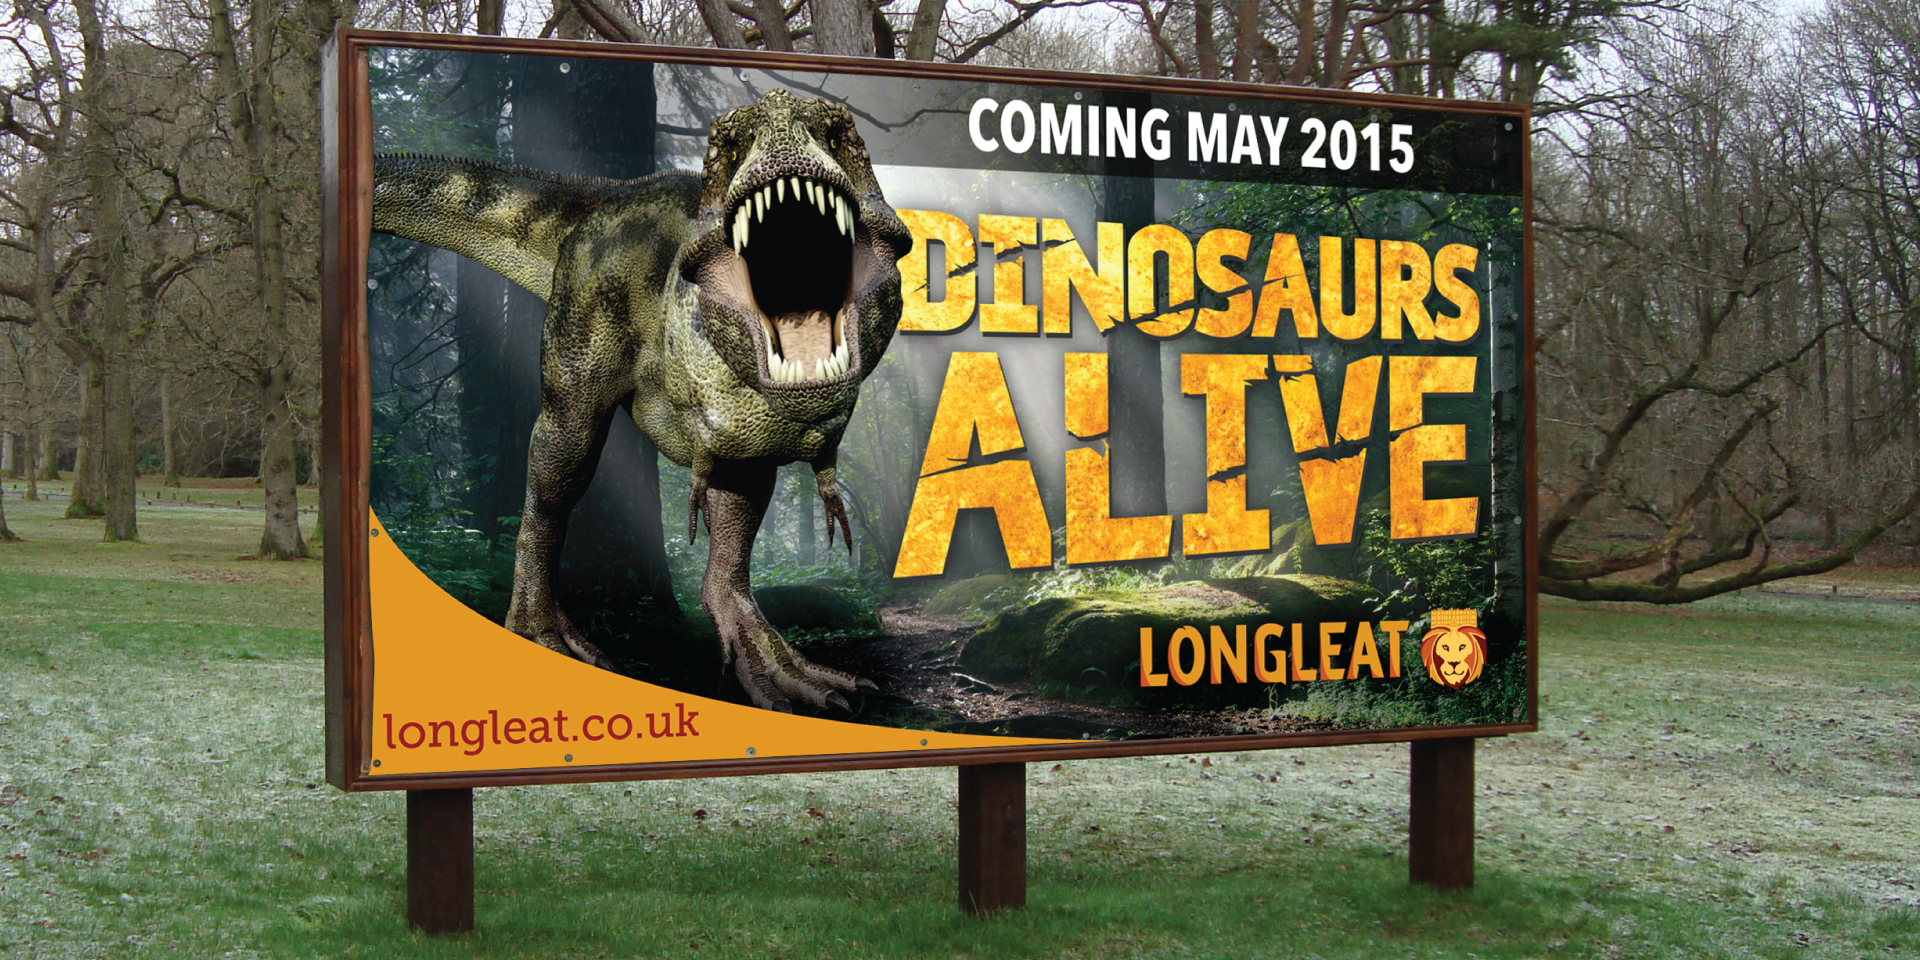 Longleat Dinosaurs Alive advertising